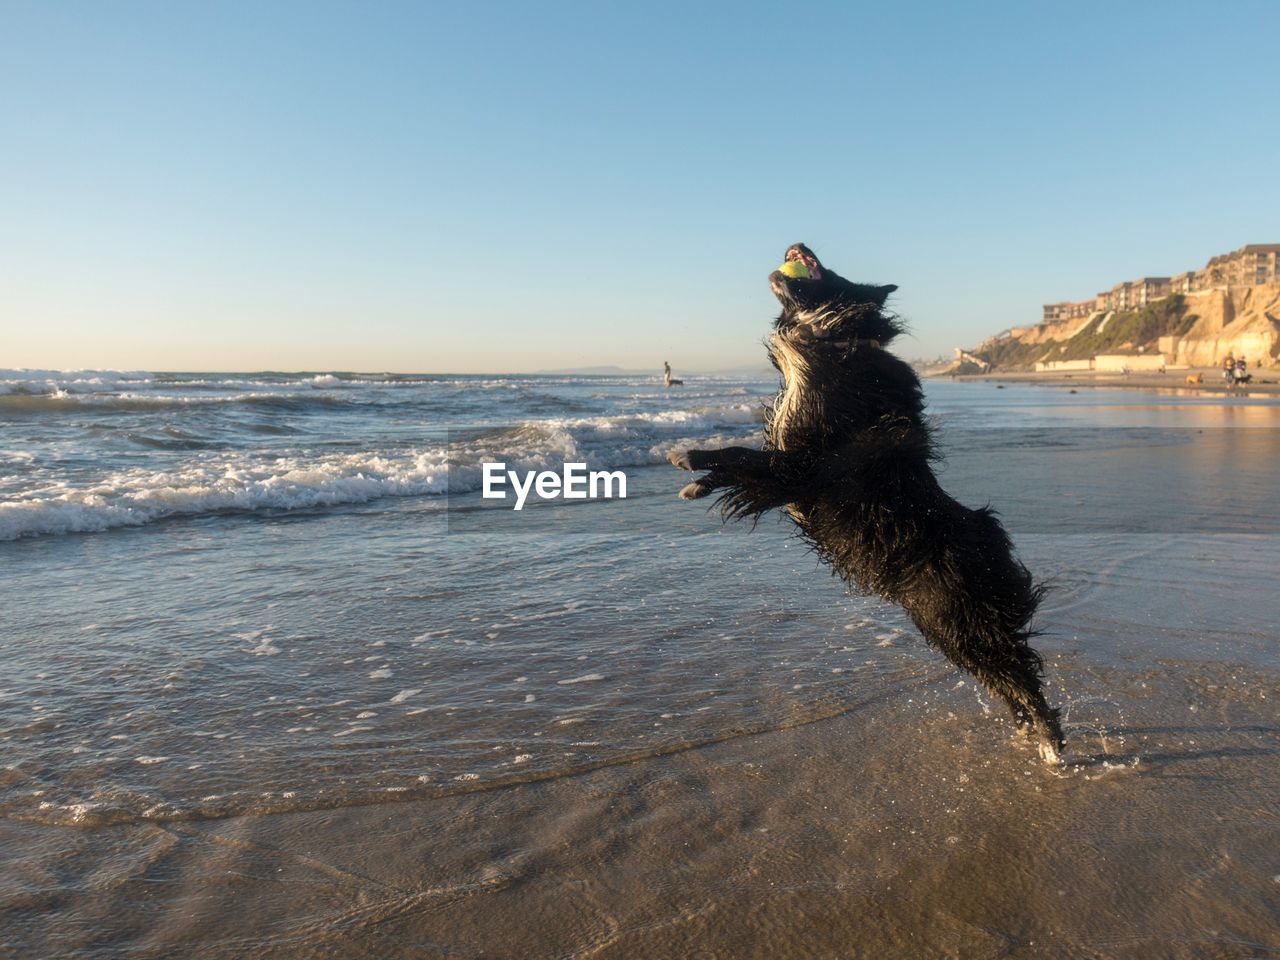 Dog playing catch on beach